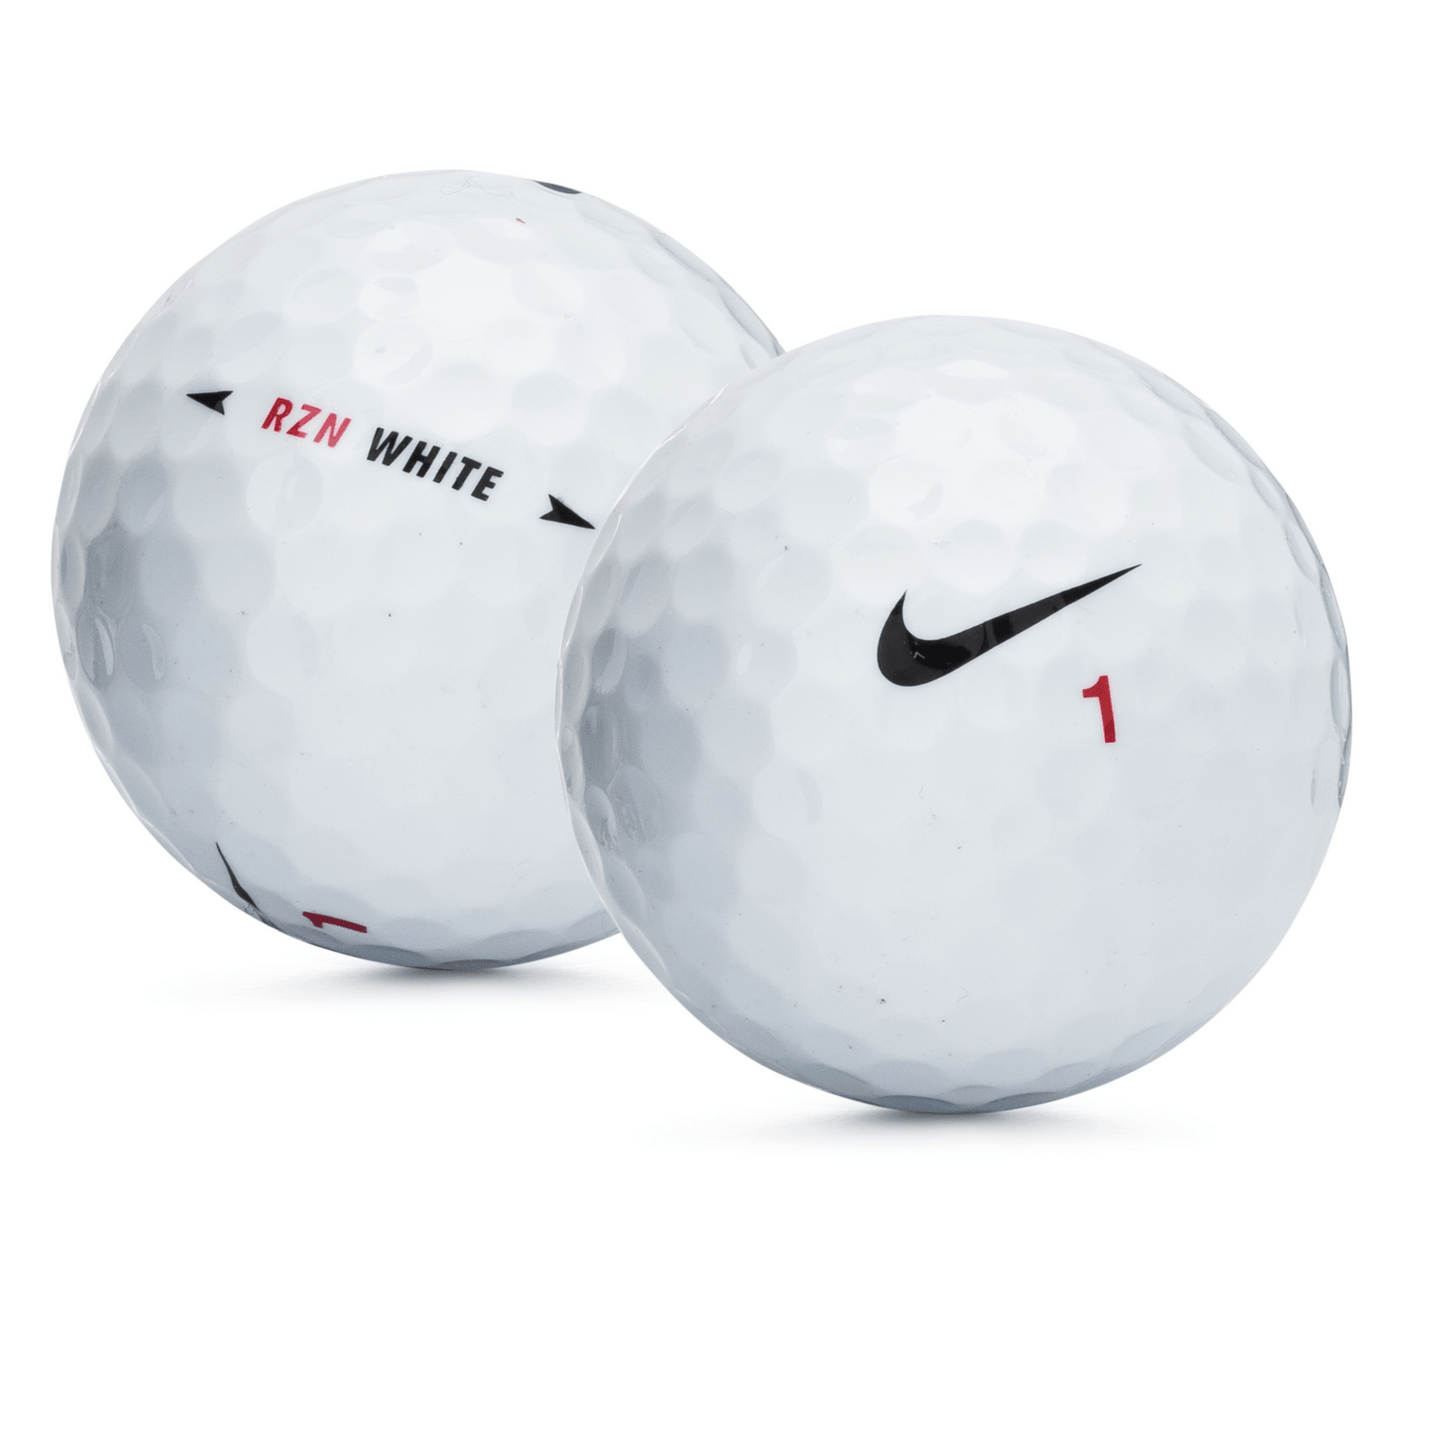 Used Nike RZN White Golf Balls - 1 Dozen